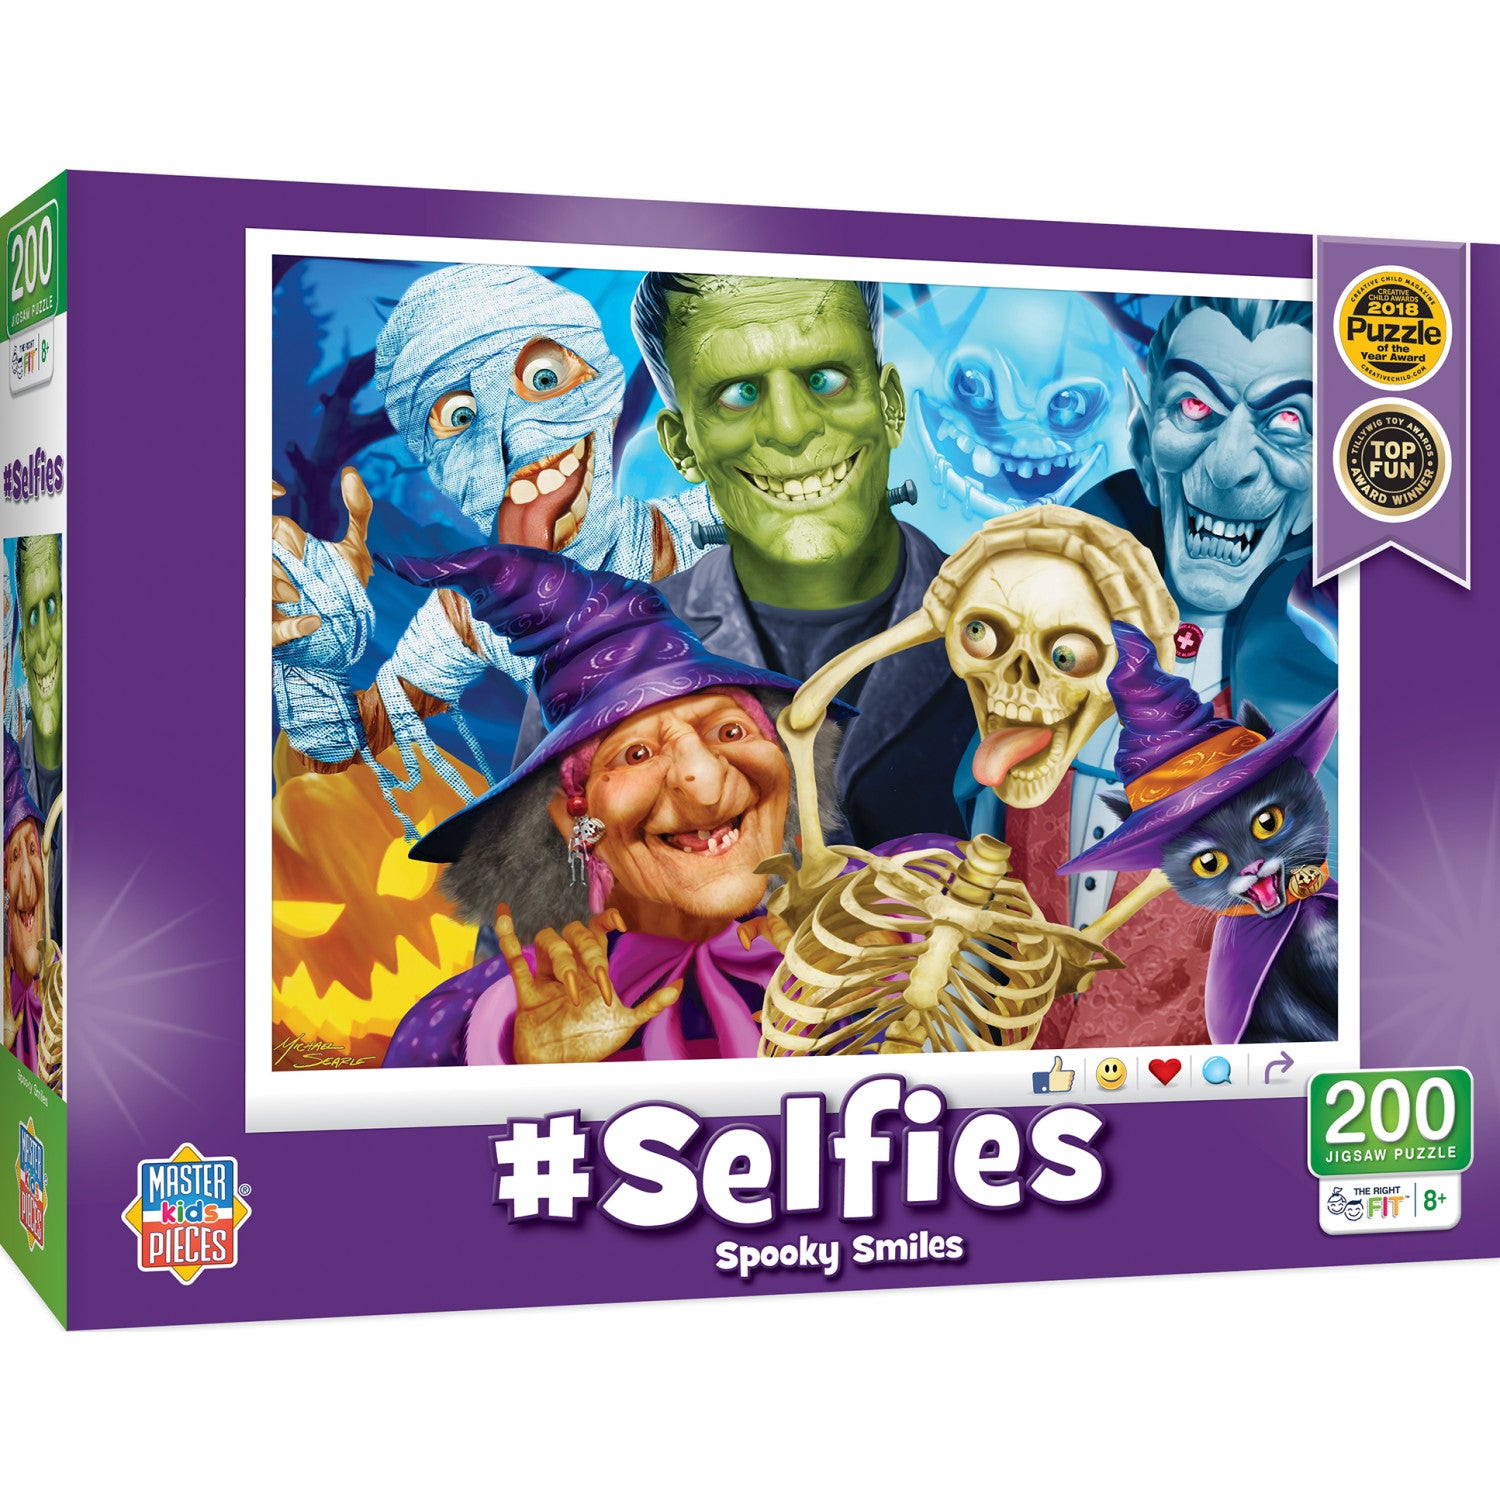 Selfies - Spooky Smiles 200 Piece Kids Puzzle